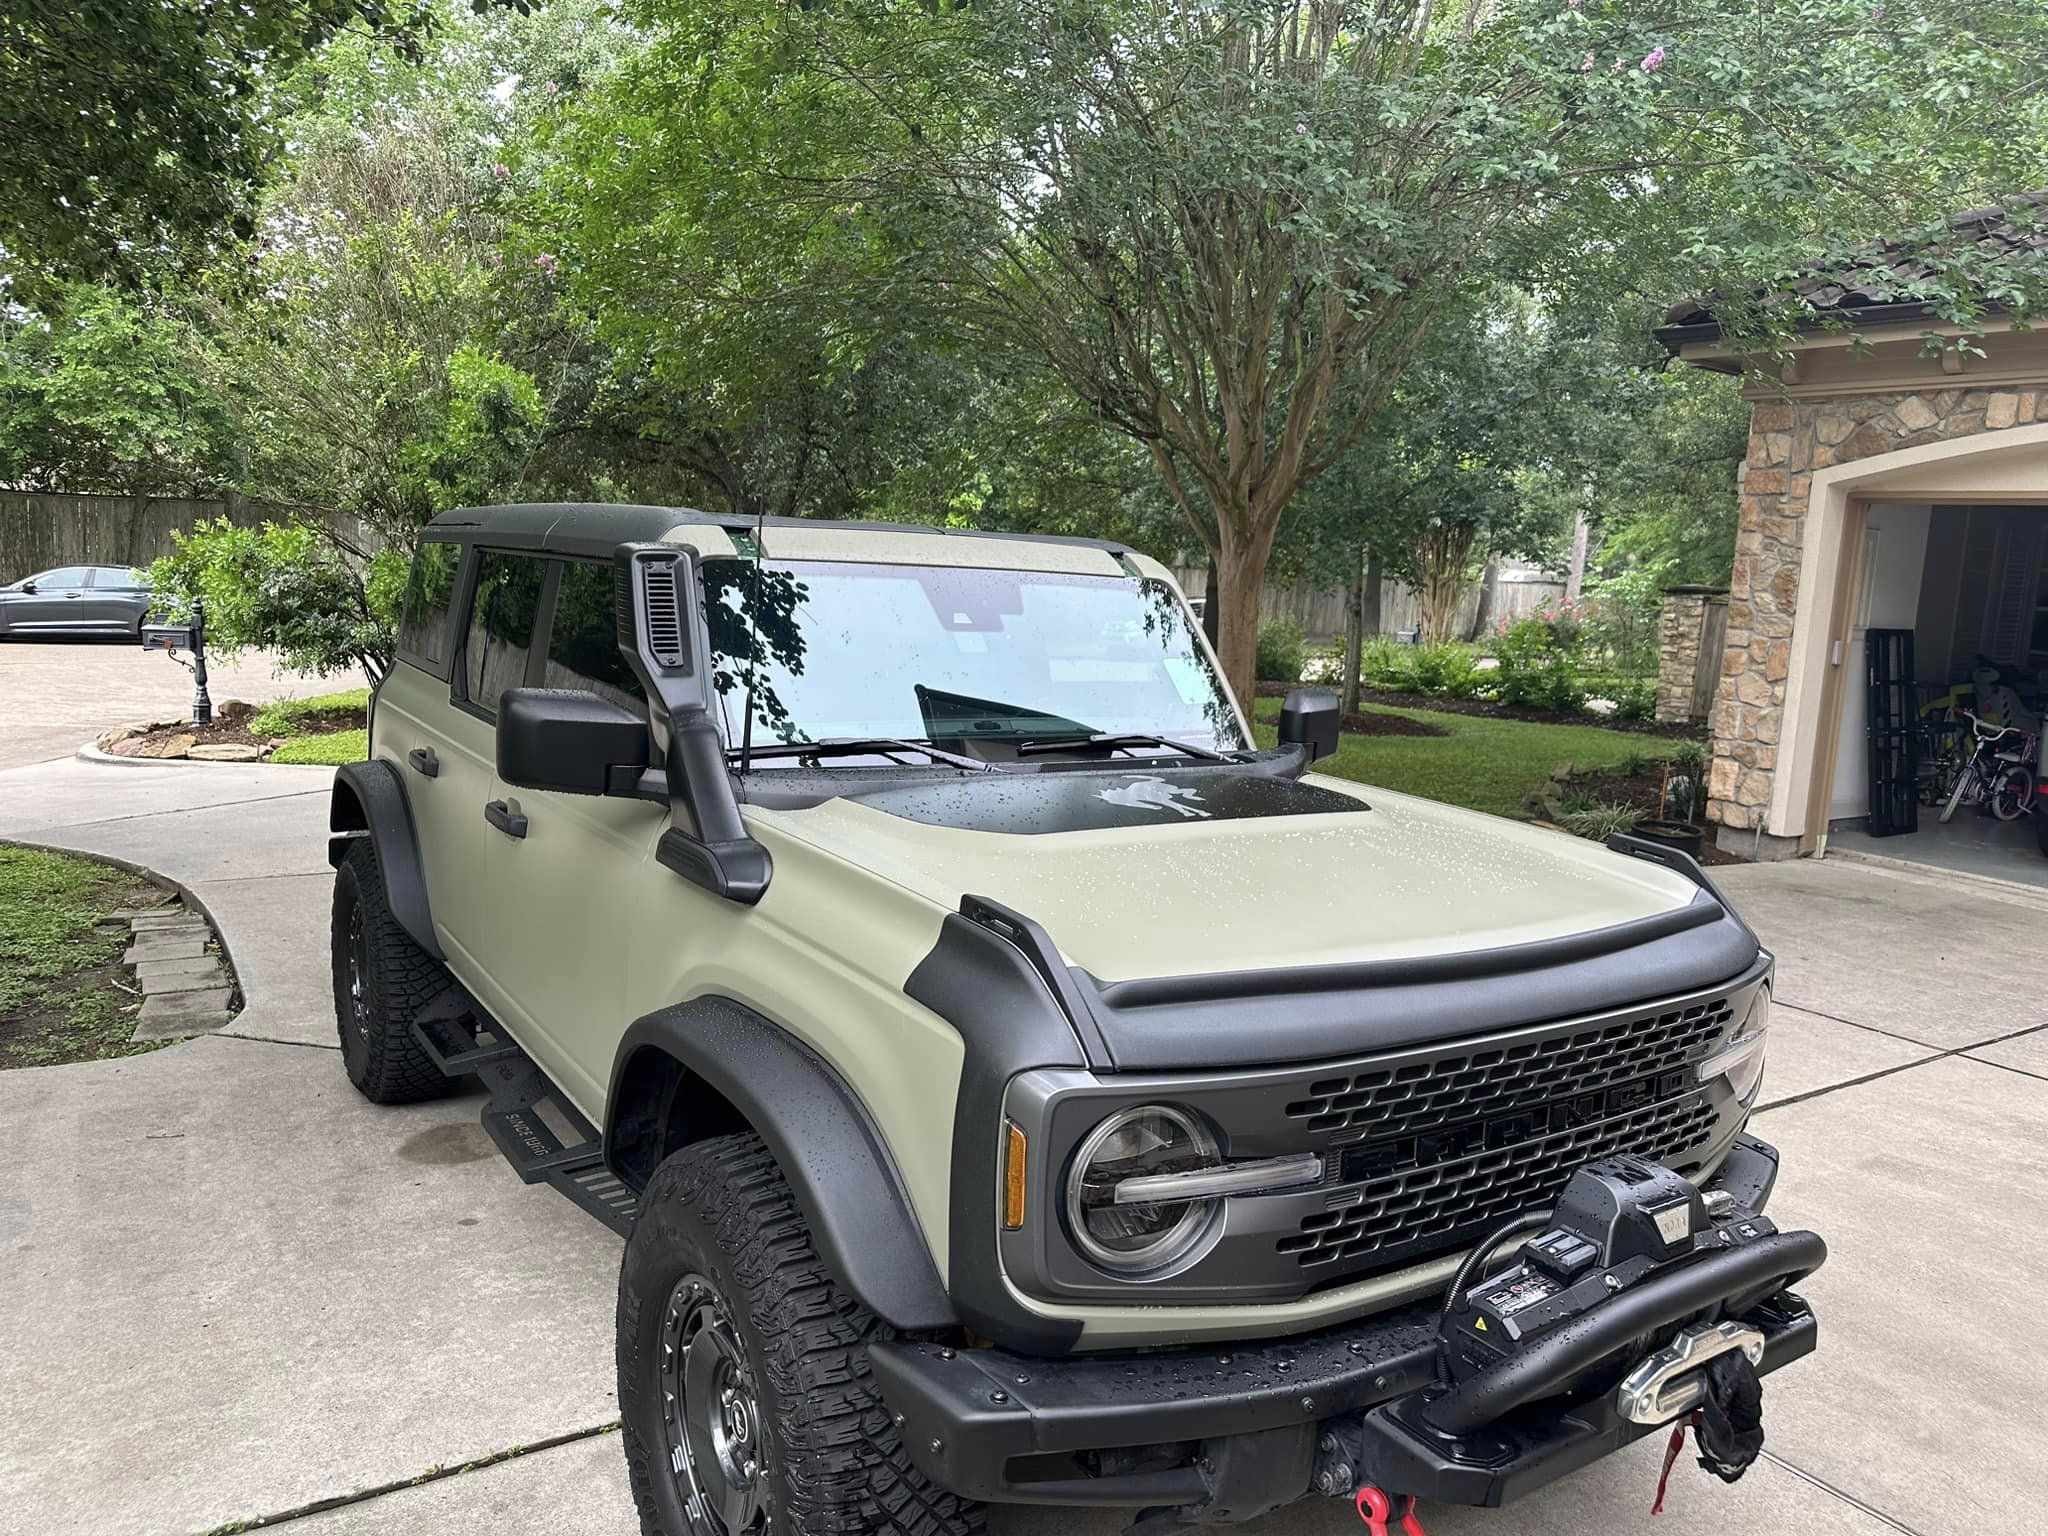 Ford Bronco Matte Khaki Green wrap Bronco Everglades looks awesome 343138766_2368806579968843_902530834536775288_n